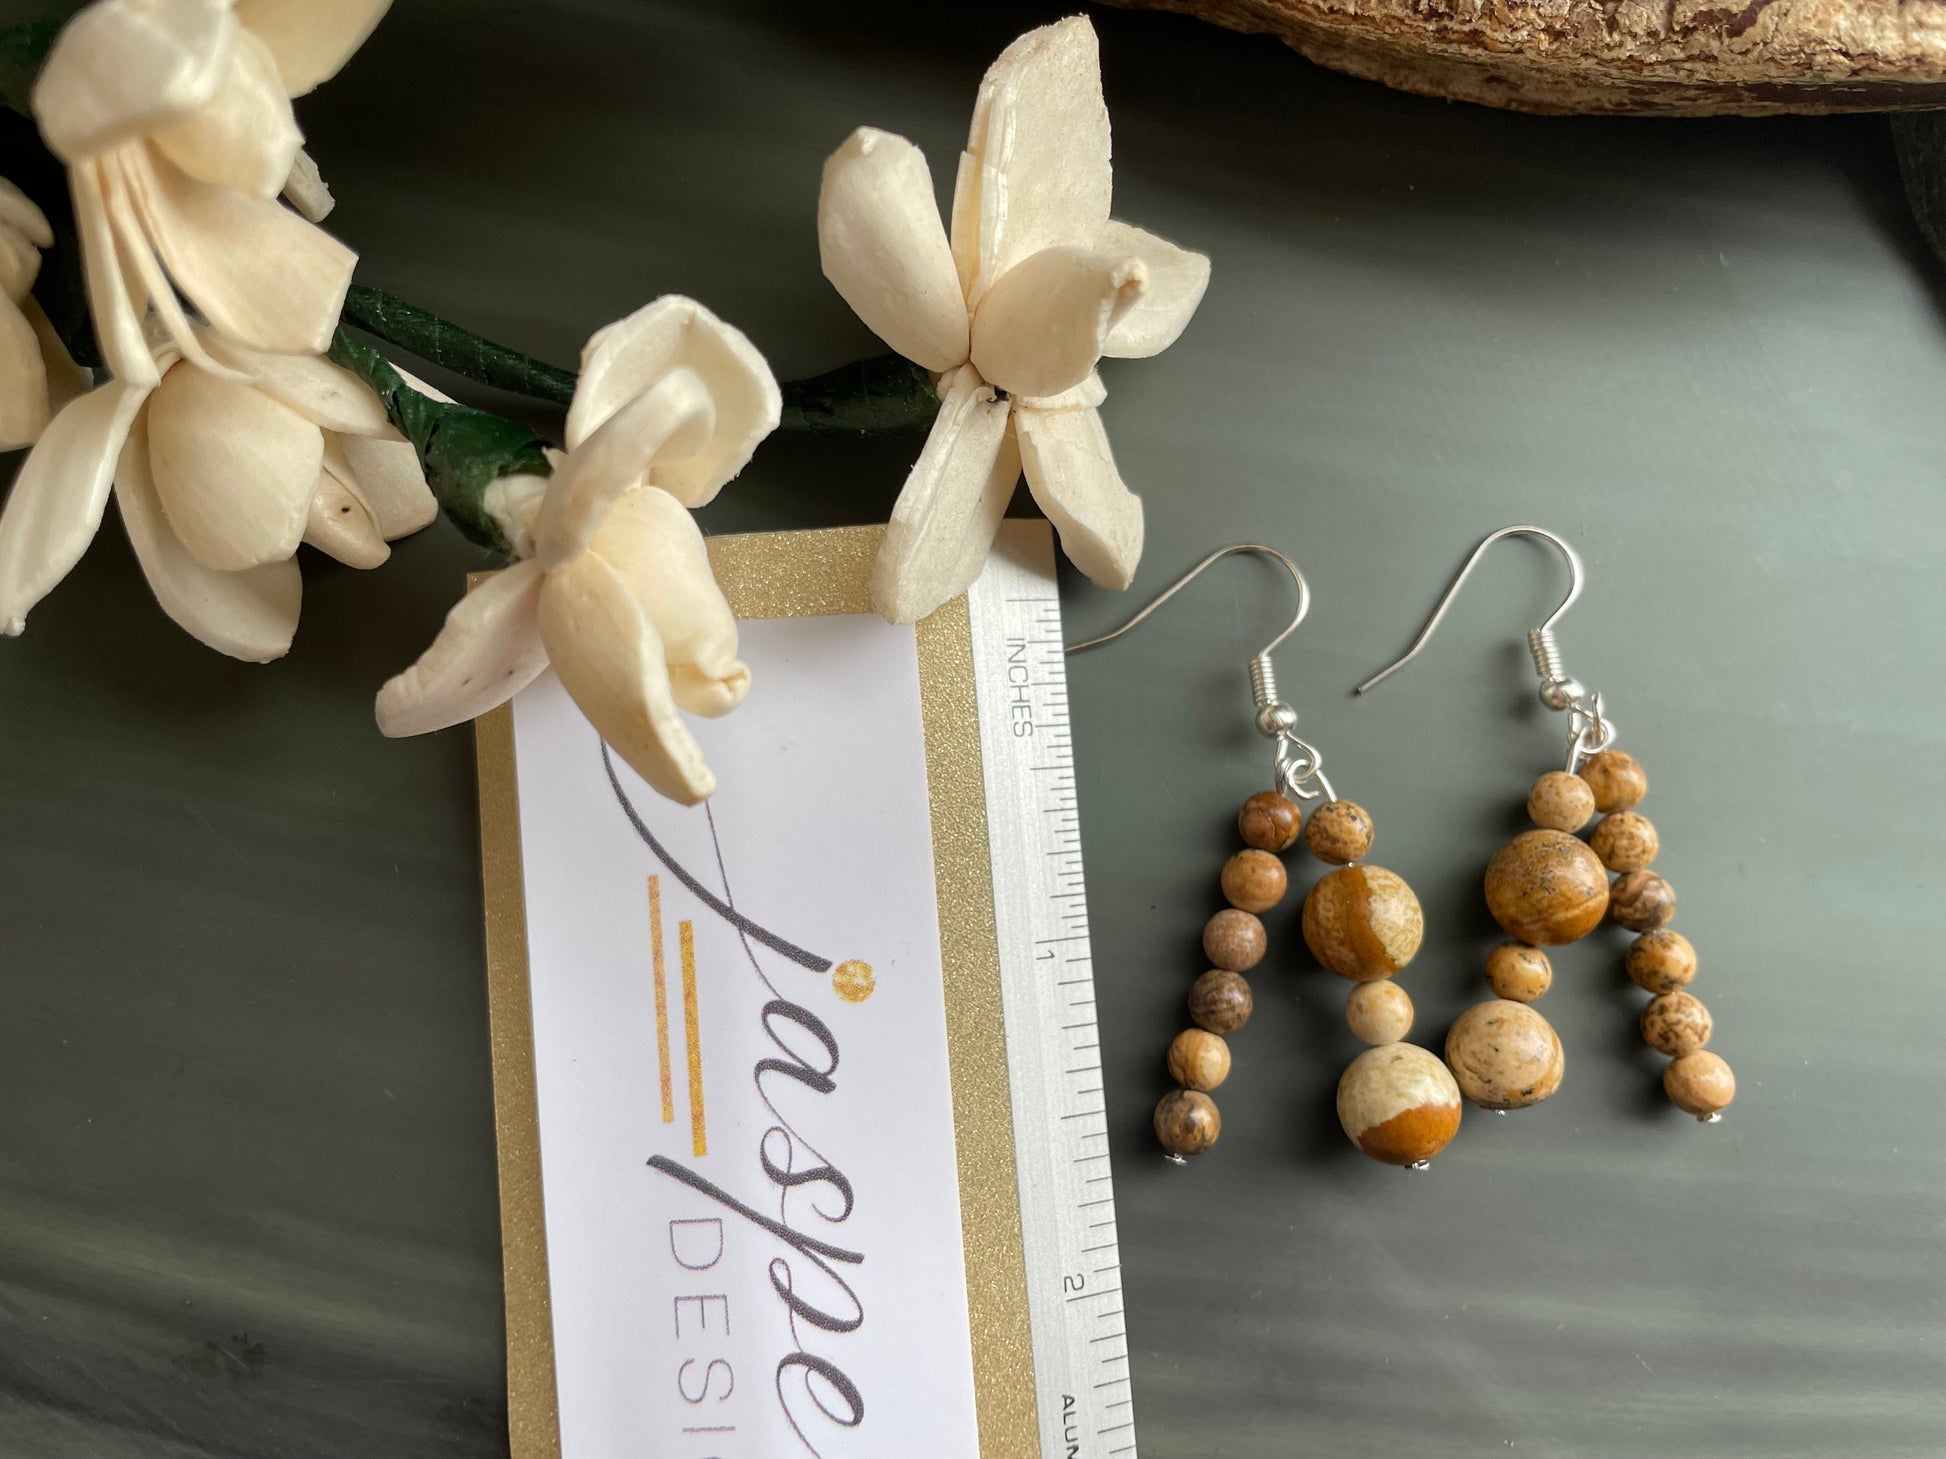 Natural Picture Jasper gemstone earrings, handmade dangle earrings, silver plated earring wire